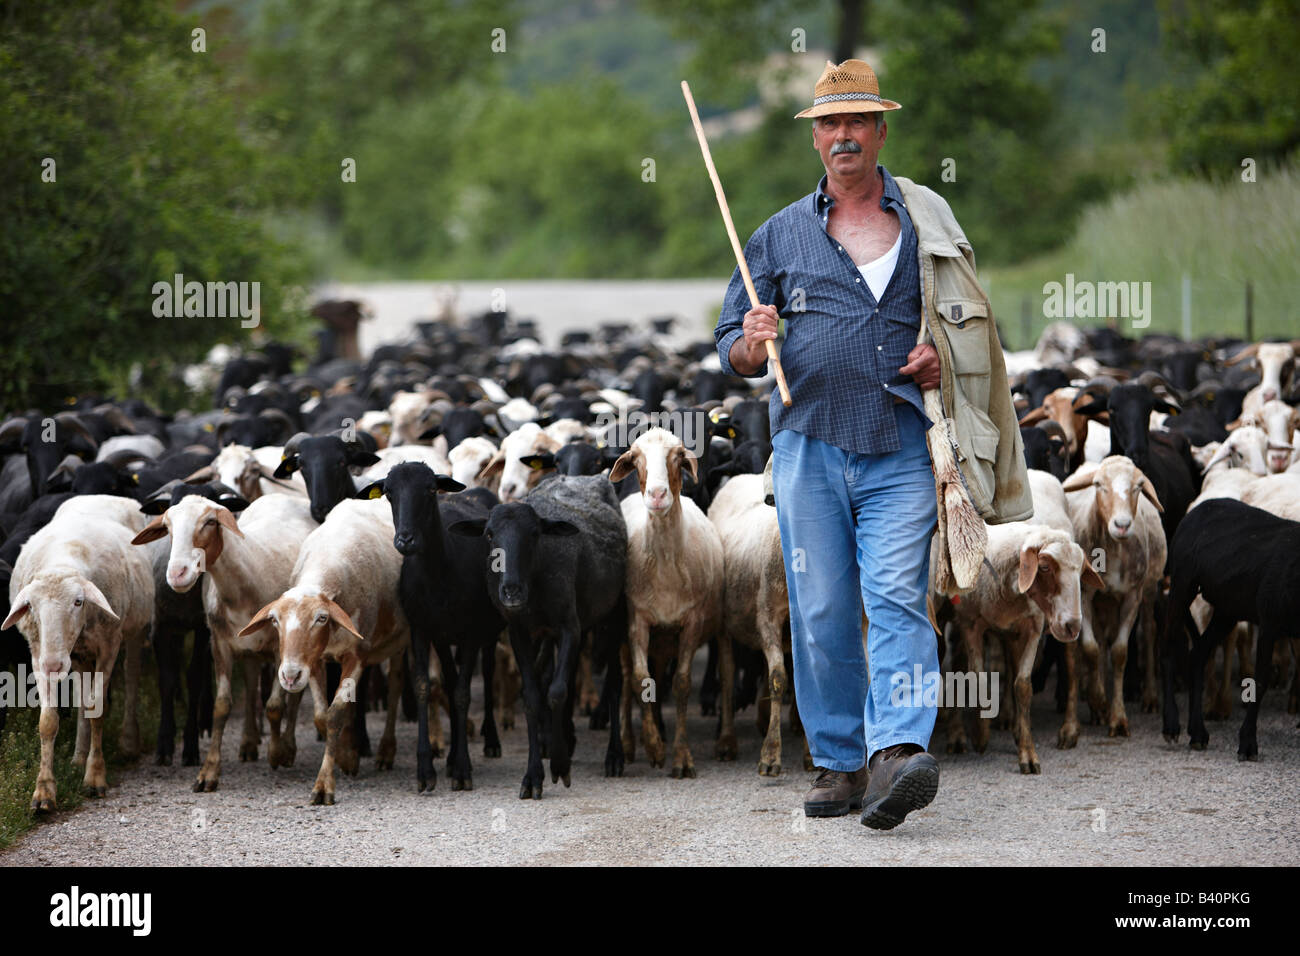 Santino, a Umbrian shepherd, with his flock near Campi, Valnerina, Umbria, Italy Stock Photo